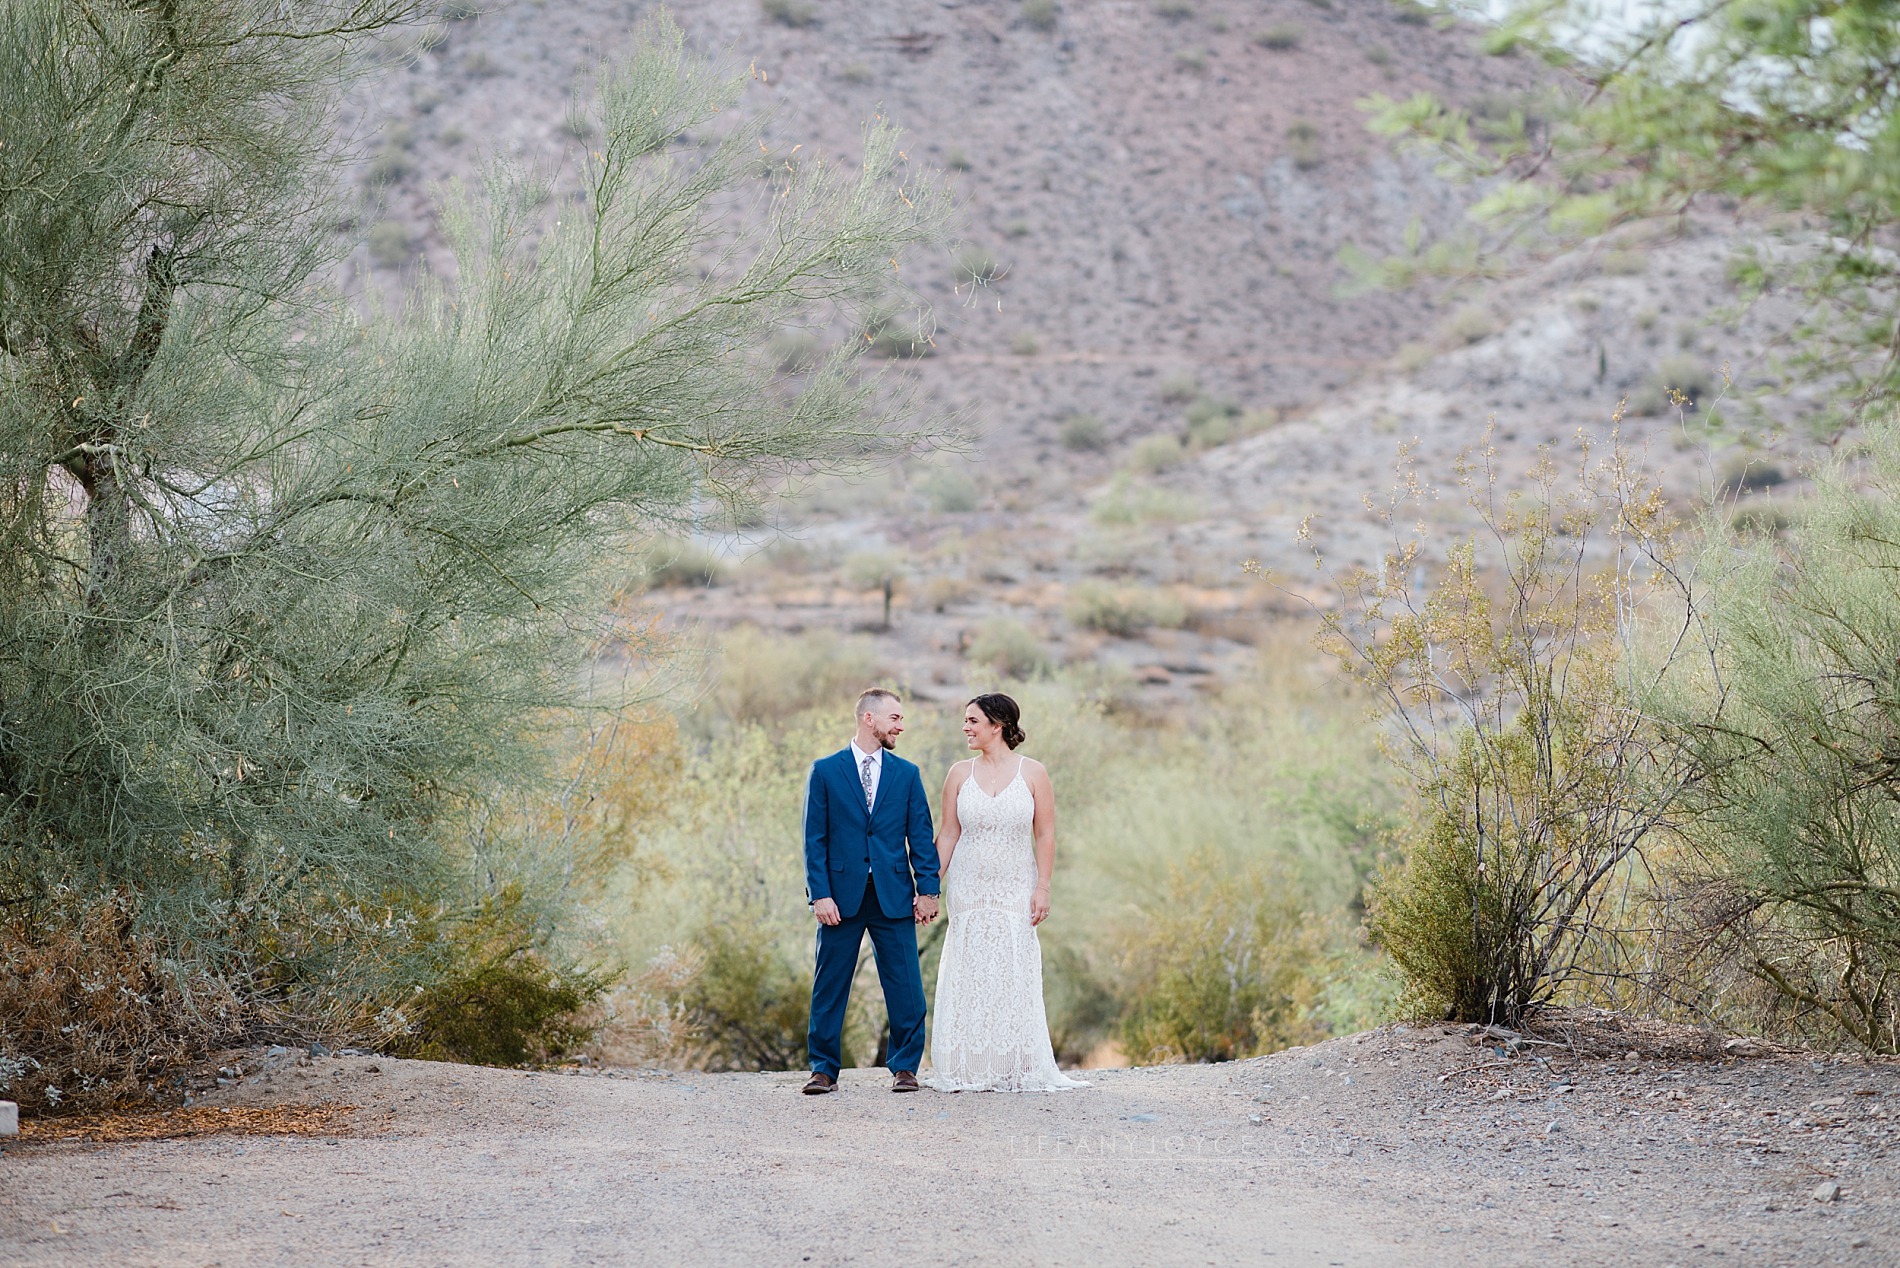 Bride and groom holding hands in desert during intimate phoenix elopement